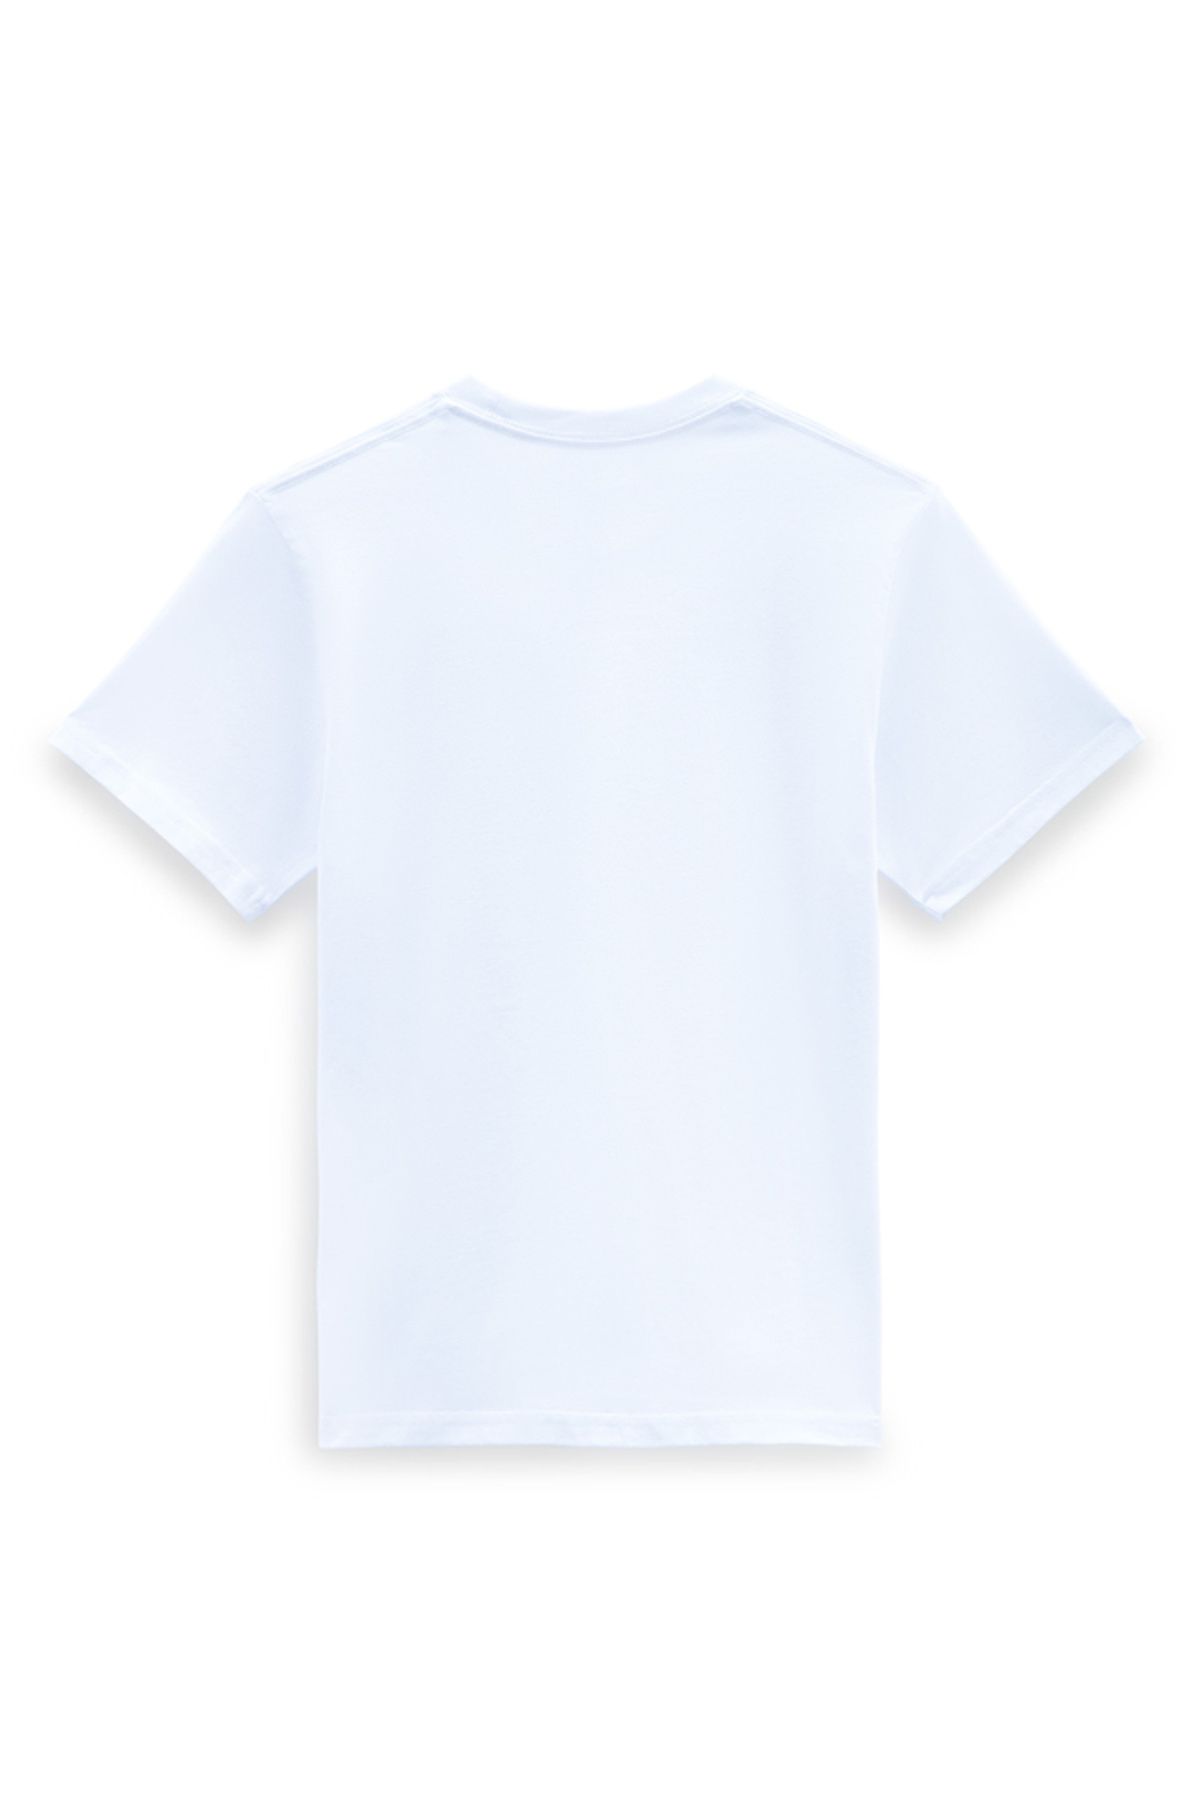 Vans Düz Beyaz Erkek Çocuk T-Shirt VN00089TWHT1 SIDESTRIPE STACKED SS